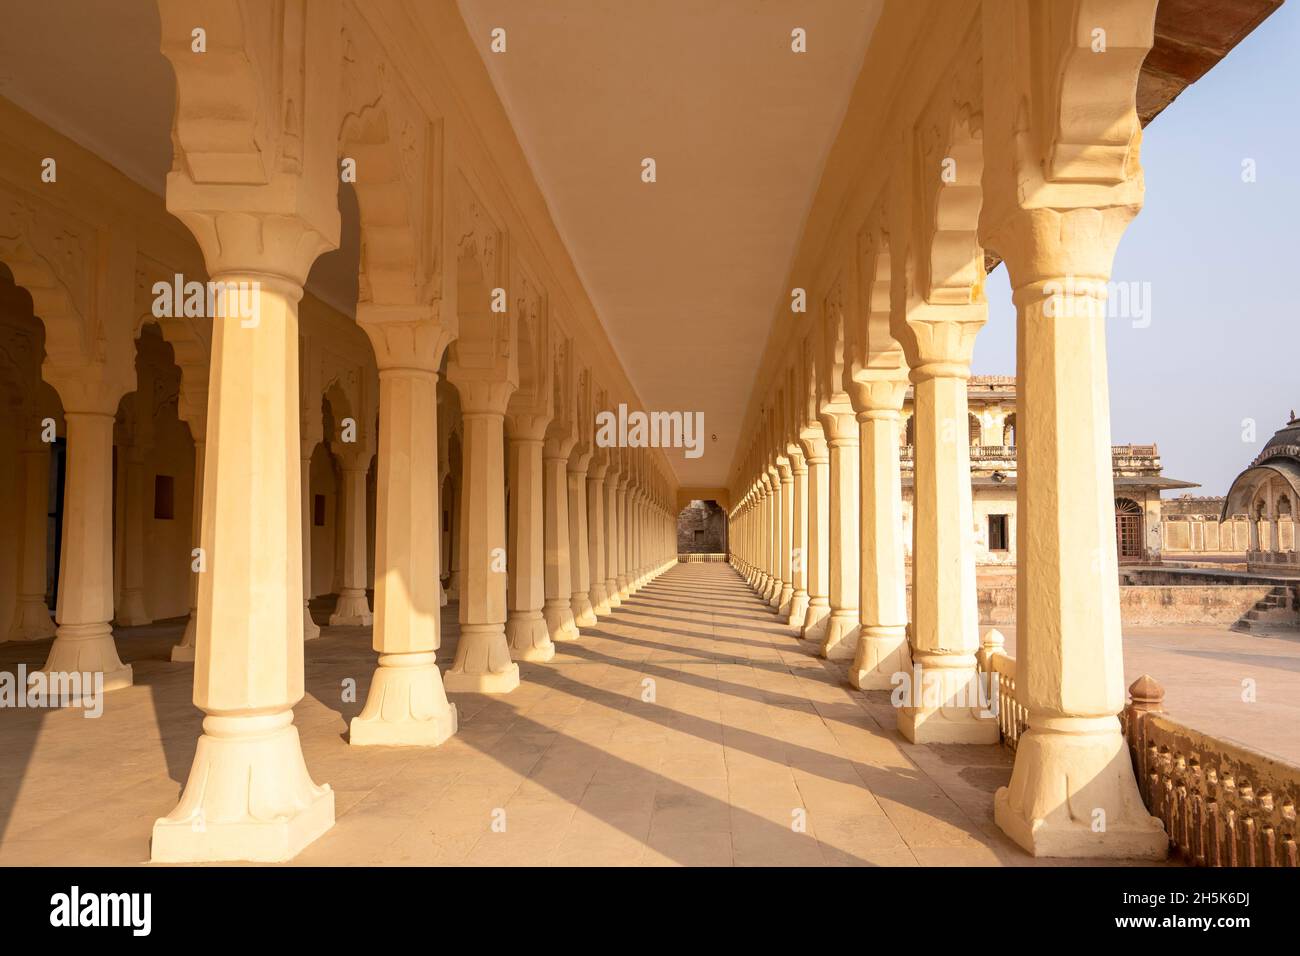 Colonnaded walkway of the inner courtyard inside Ahhichatragarh Fort (Nagaur Fort); Nagaur, Rajasthan, India Stock Photo